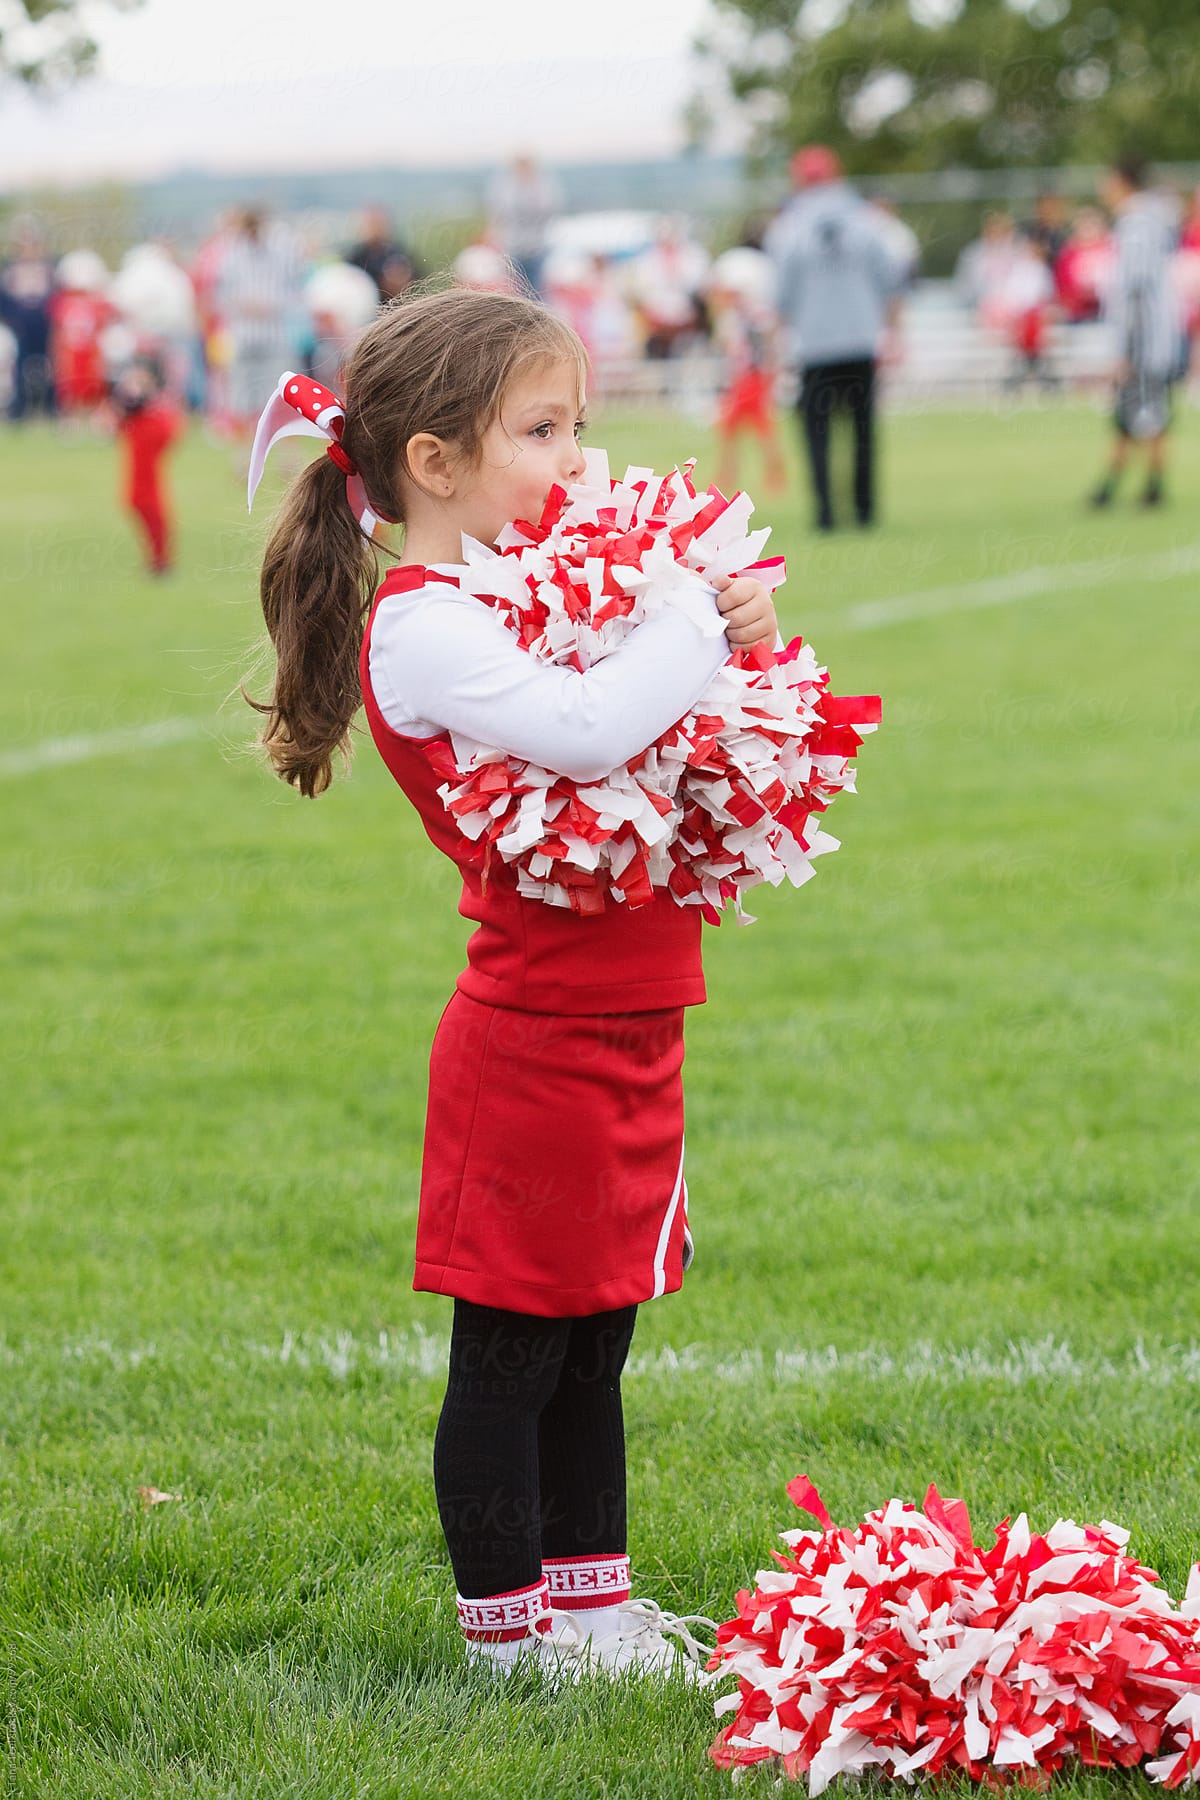 Cheerleader Pom Poms Left Next To Football Field by Stocksy Contributor  Tana Teel - Stocksy